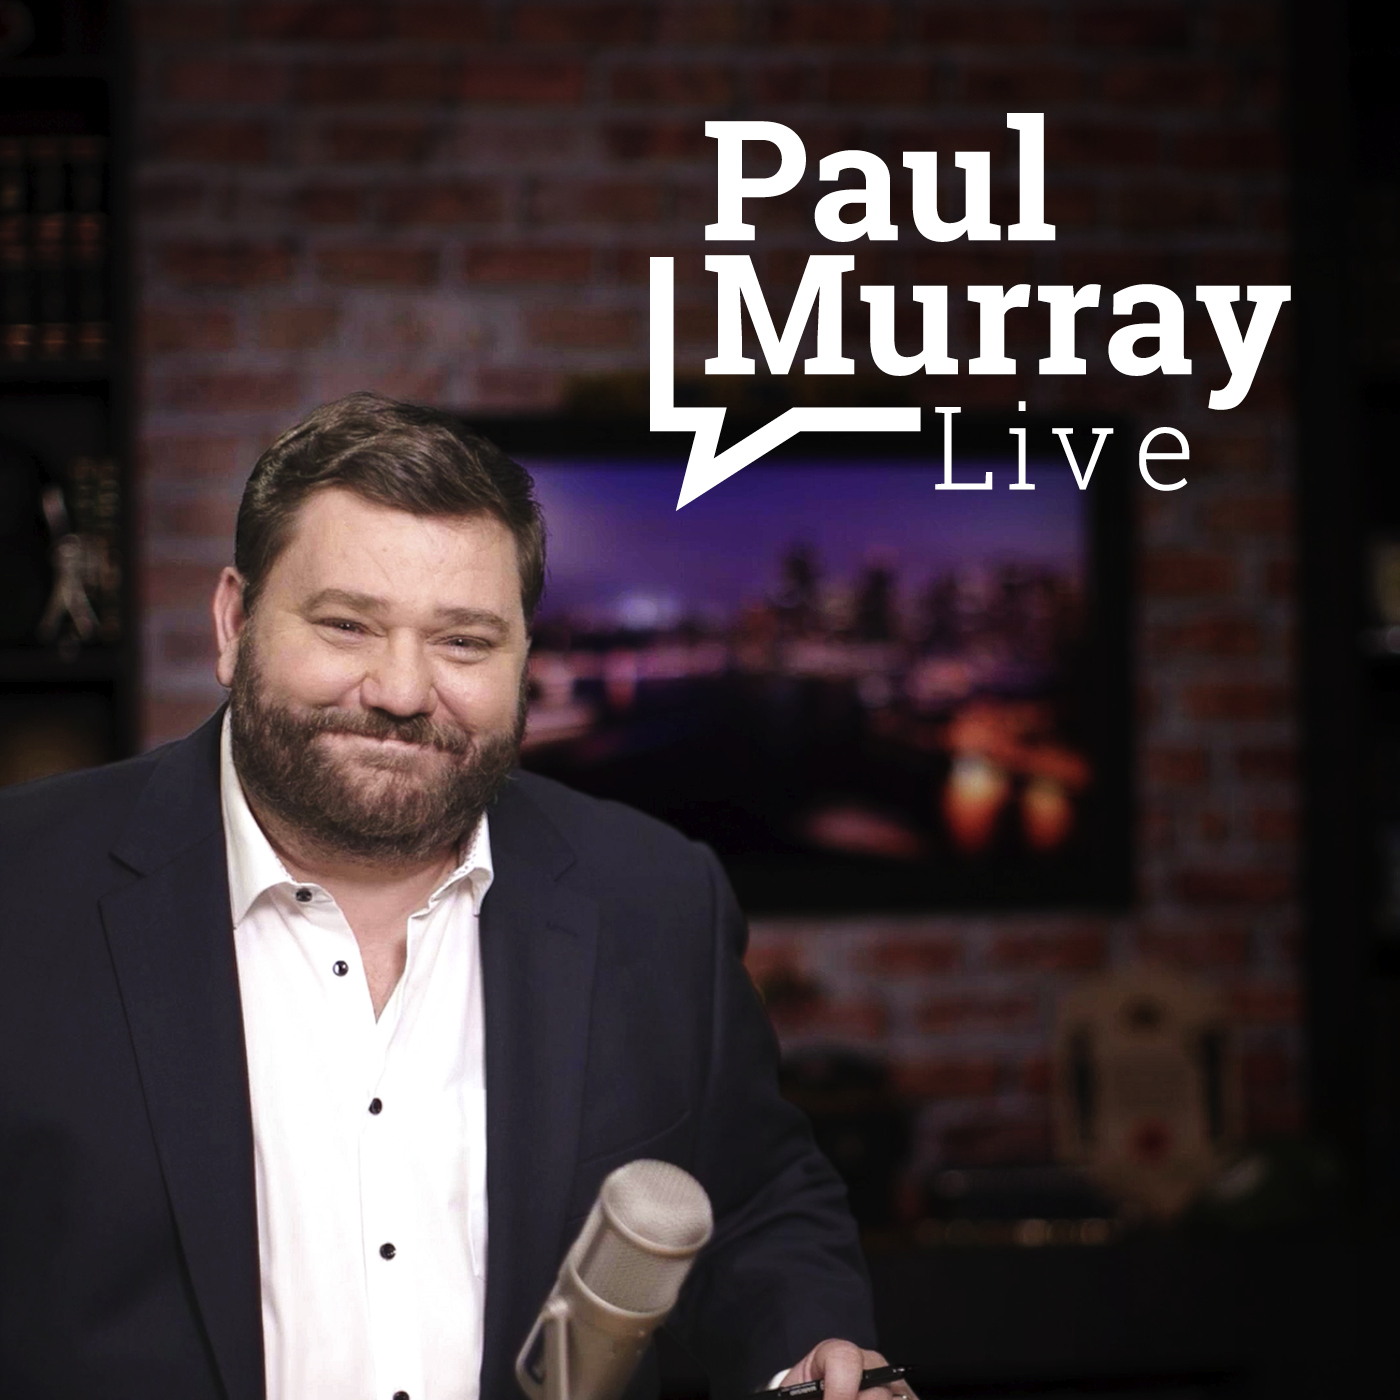 Paul Murray Live, Wednesday 24th February